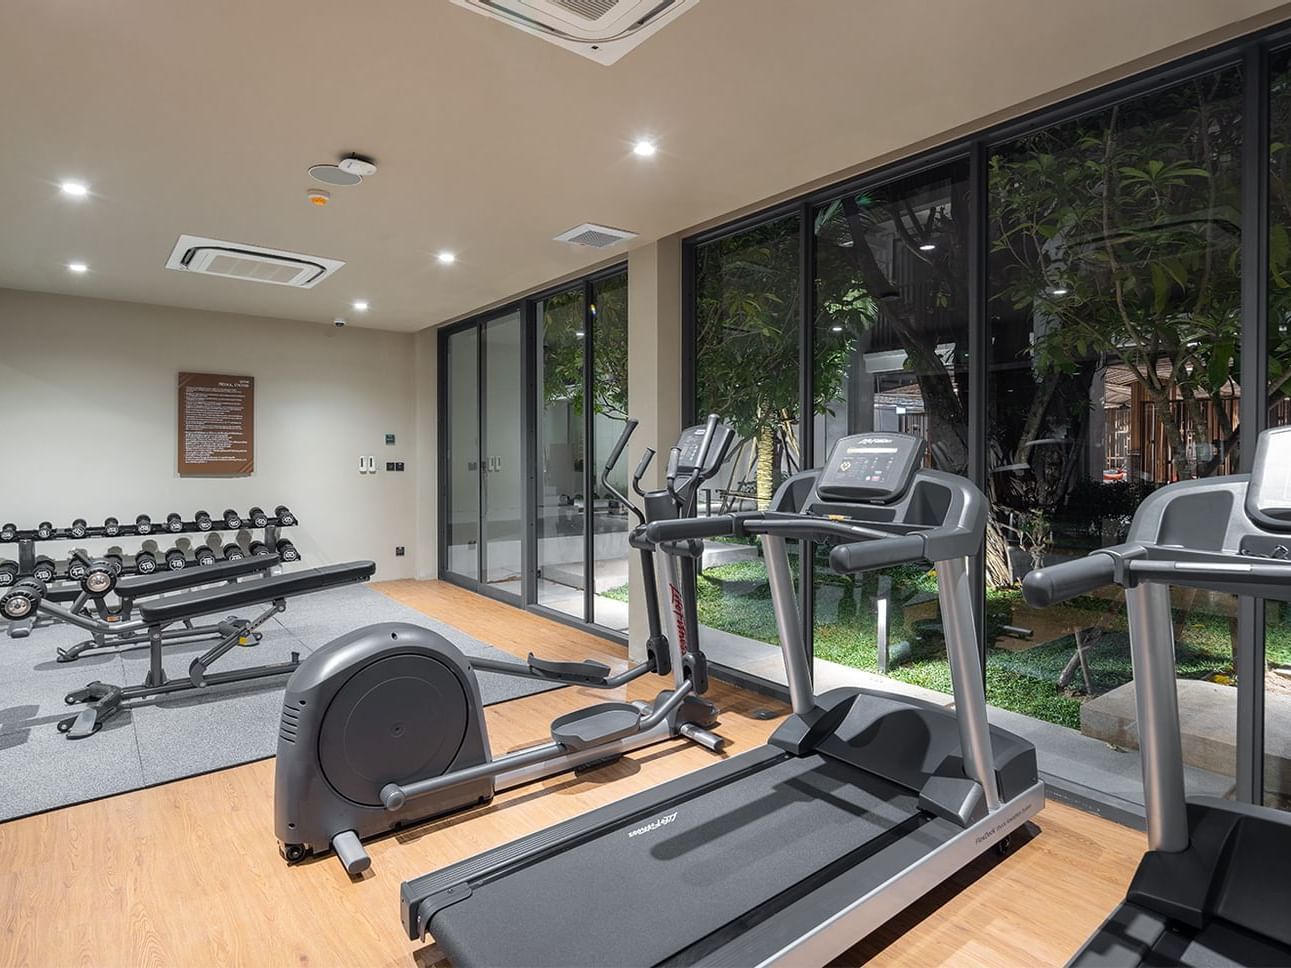 Treadmills & equipment in the gym at U Hotels & Resorts